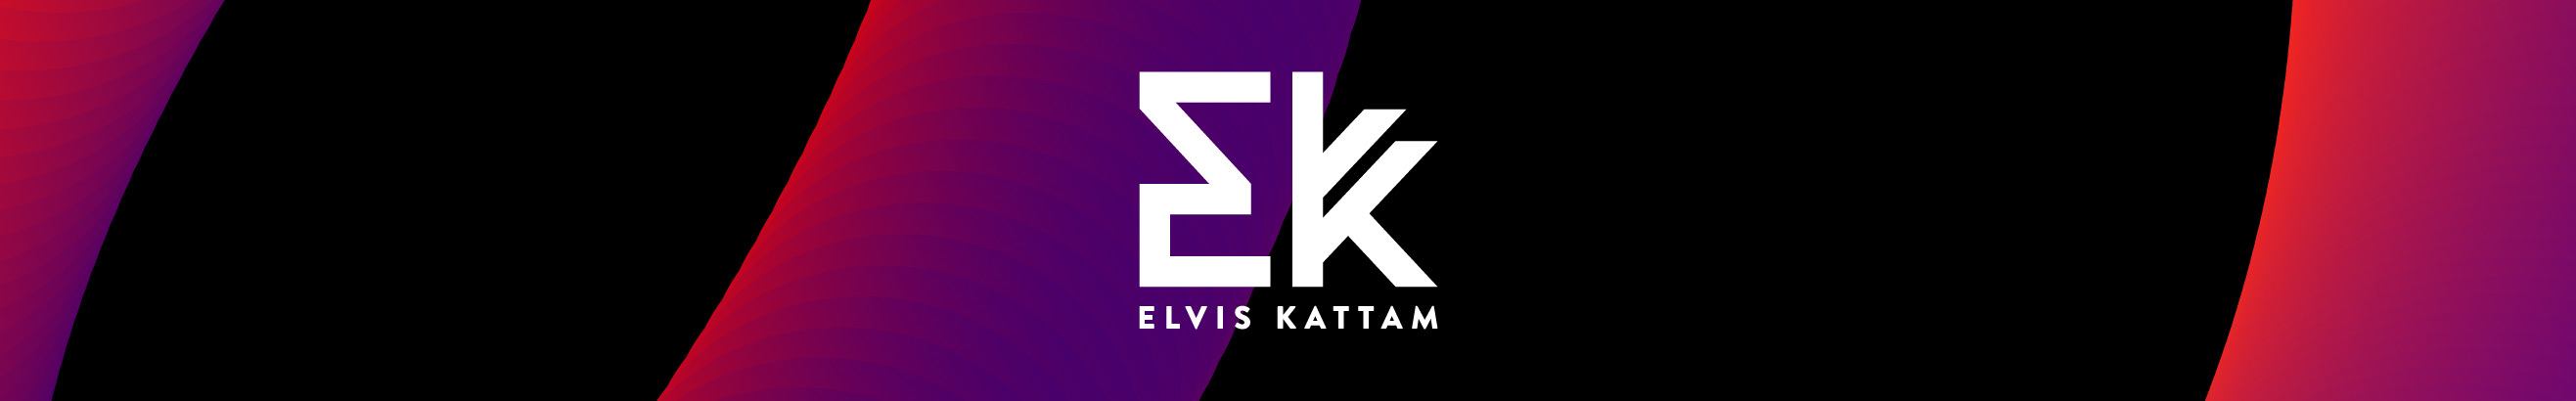 Elvis Kattam's profile banner